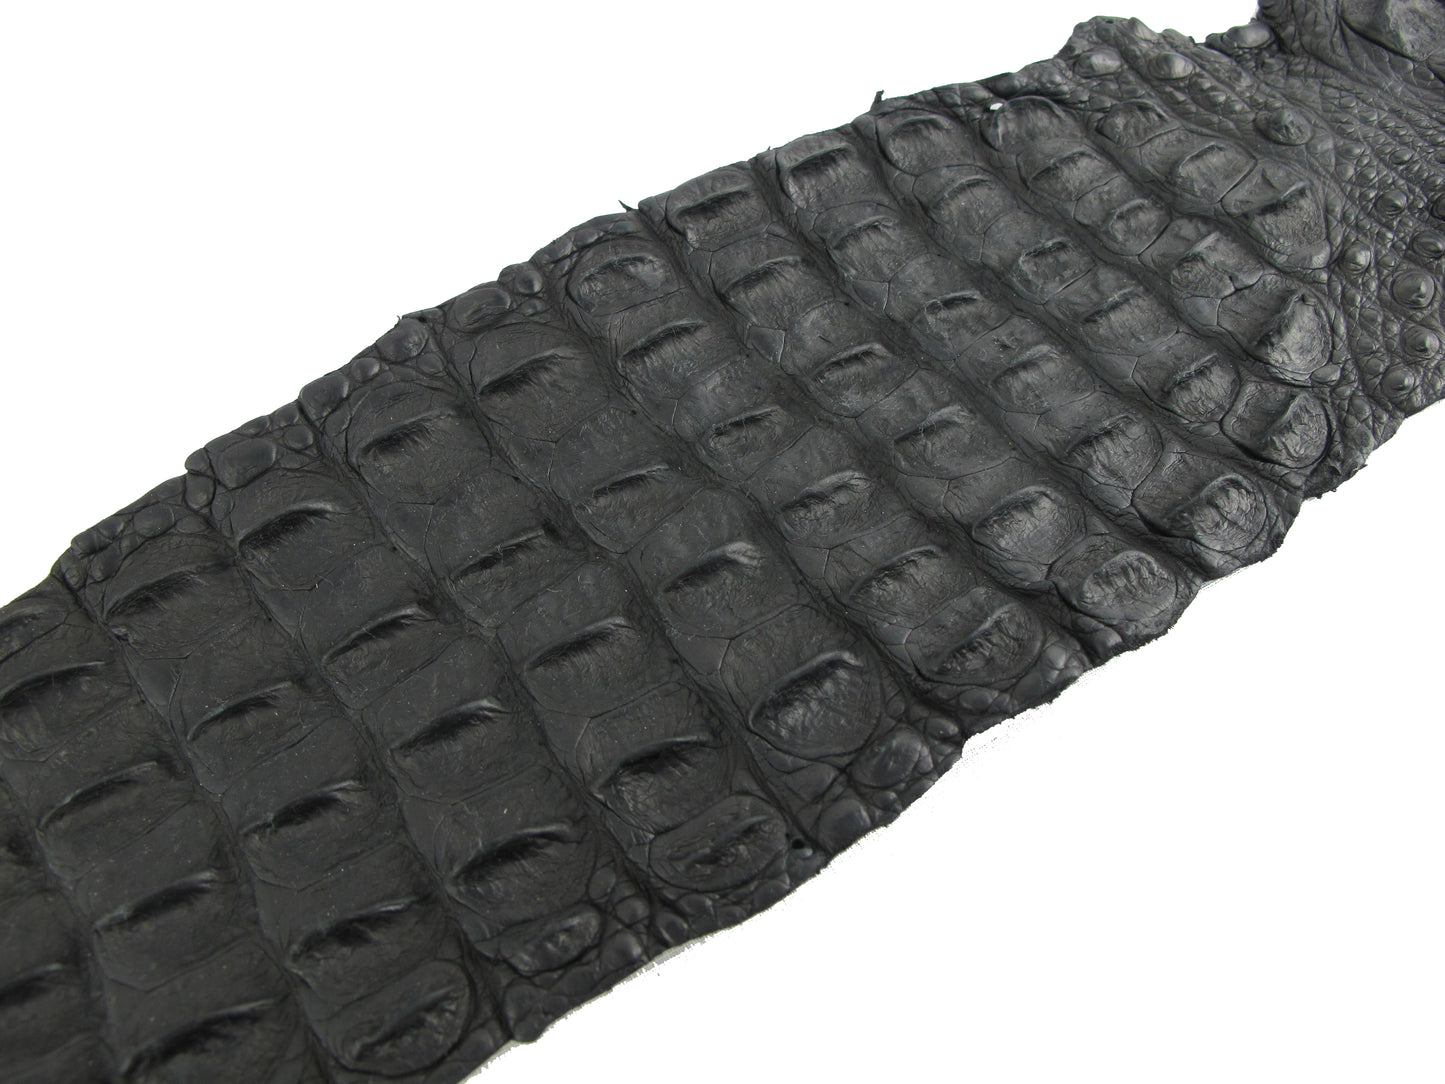 Genuine Crocodile Back Strap Skin Leather Hide Pelt